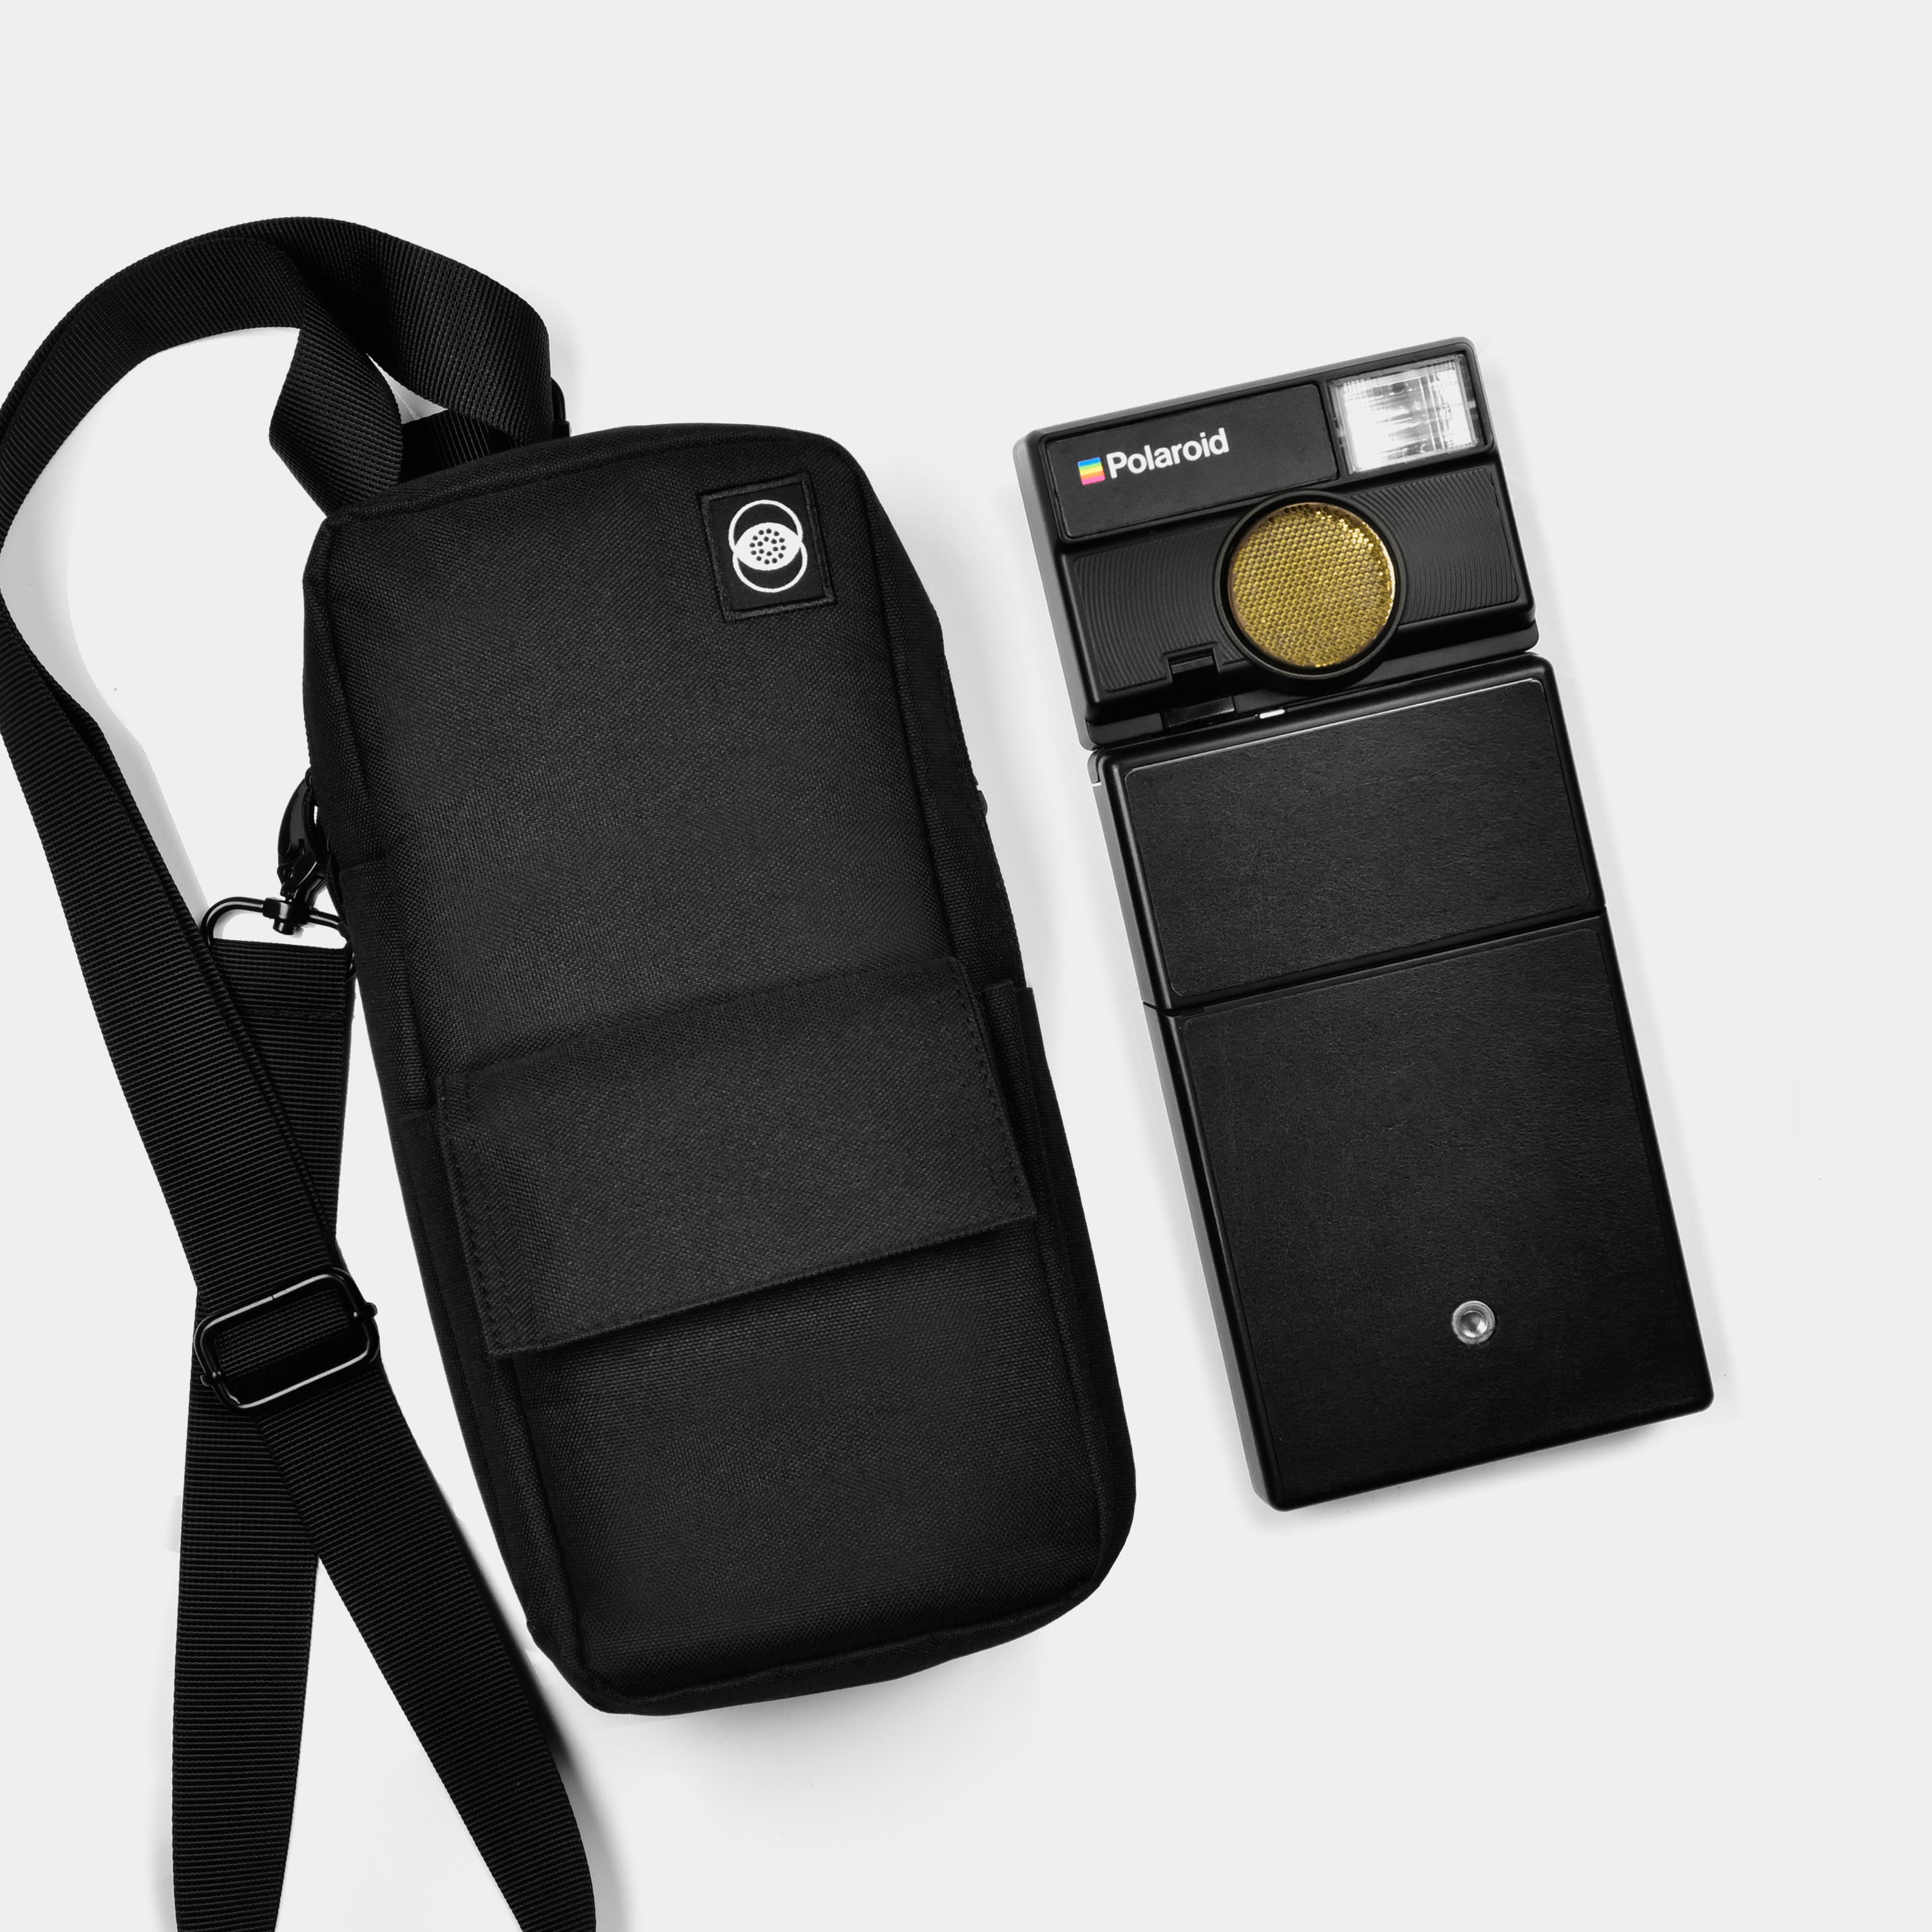 Retrospekt camera bag for Polaroid SLR 680 next to Polaroid SLR 680 camera